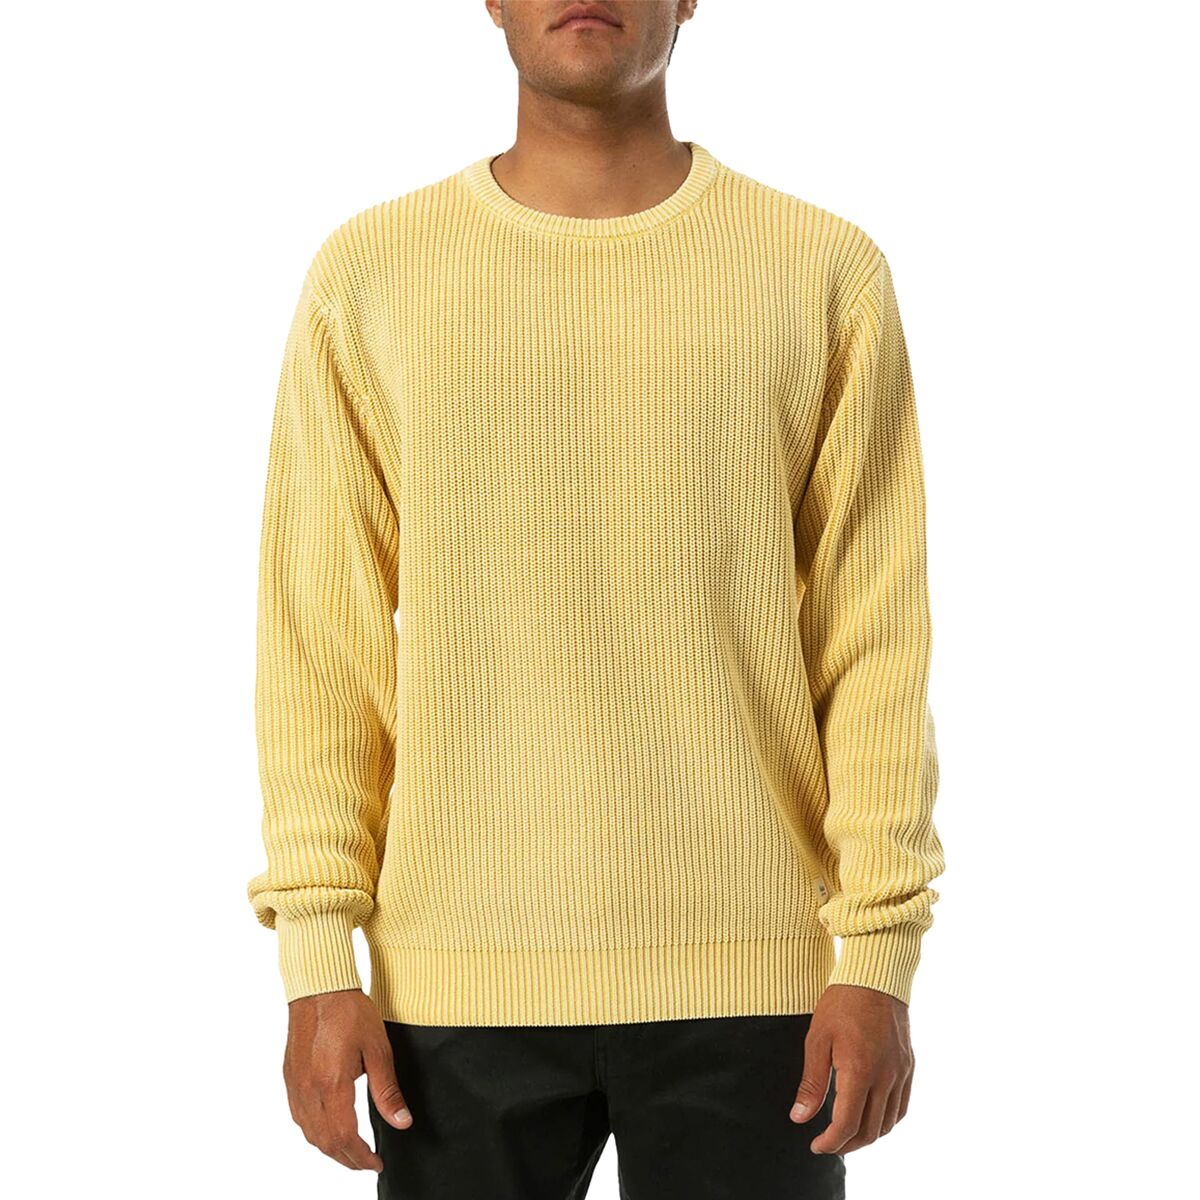 Katin Swell Sweater - Men's